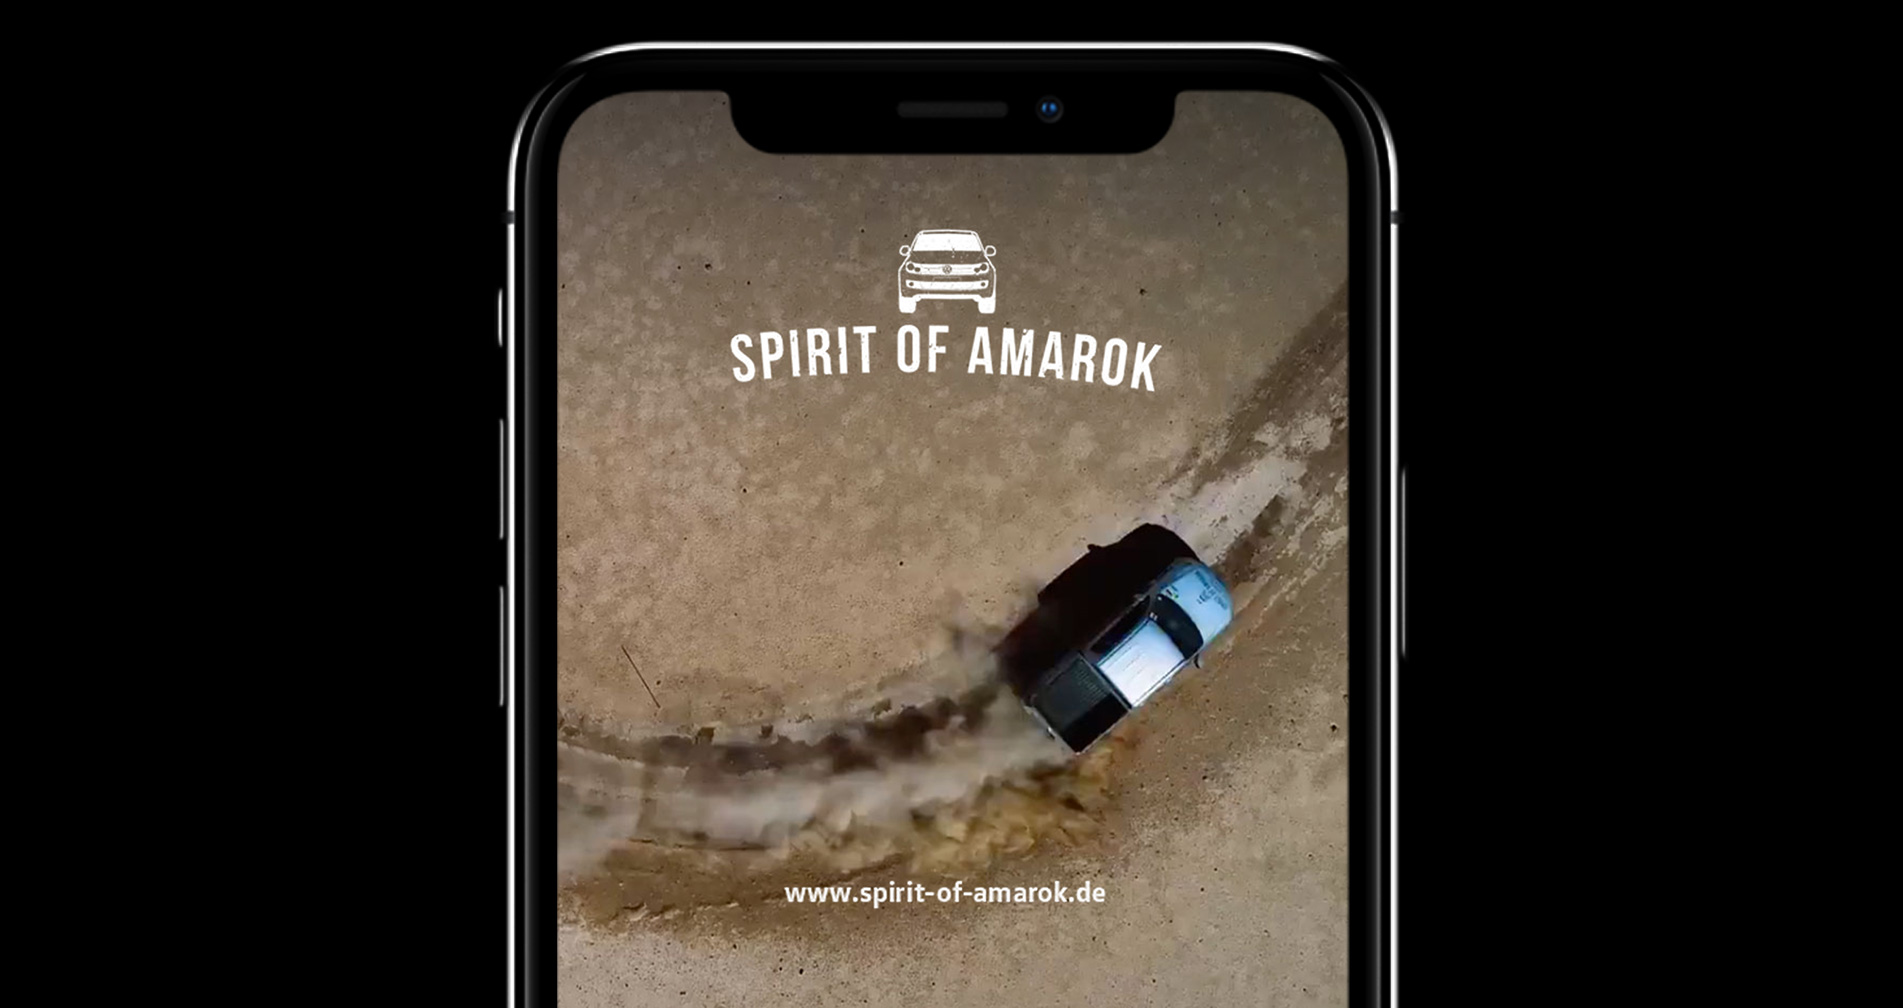 Spirit of Amarok on mobile device